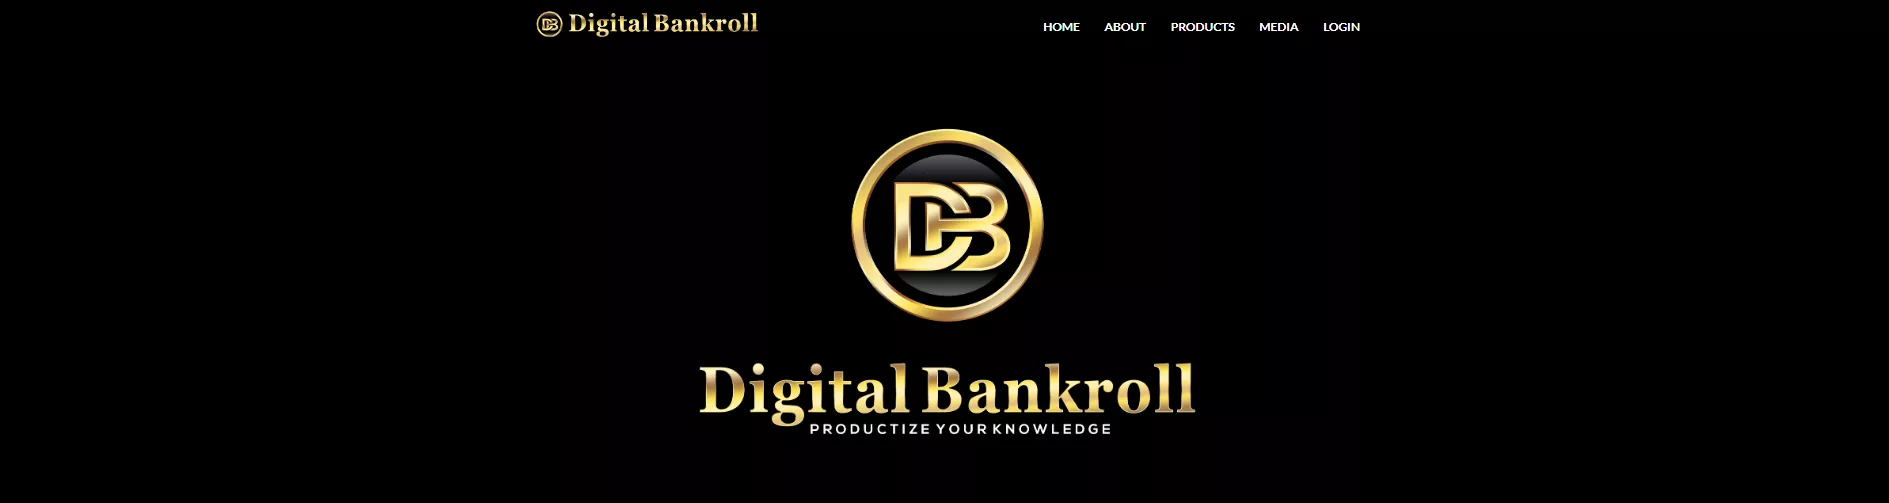 Digital Bankroll Program Reviews